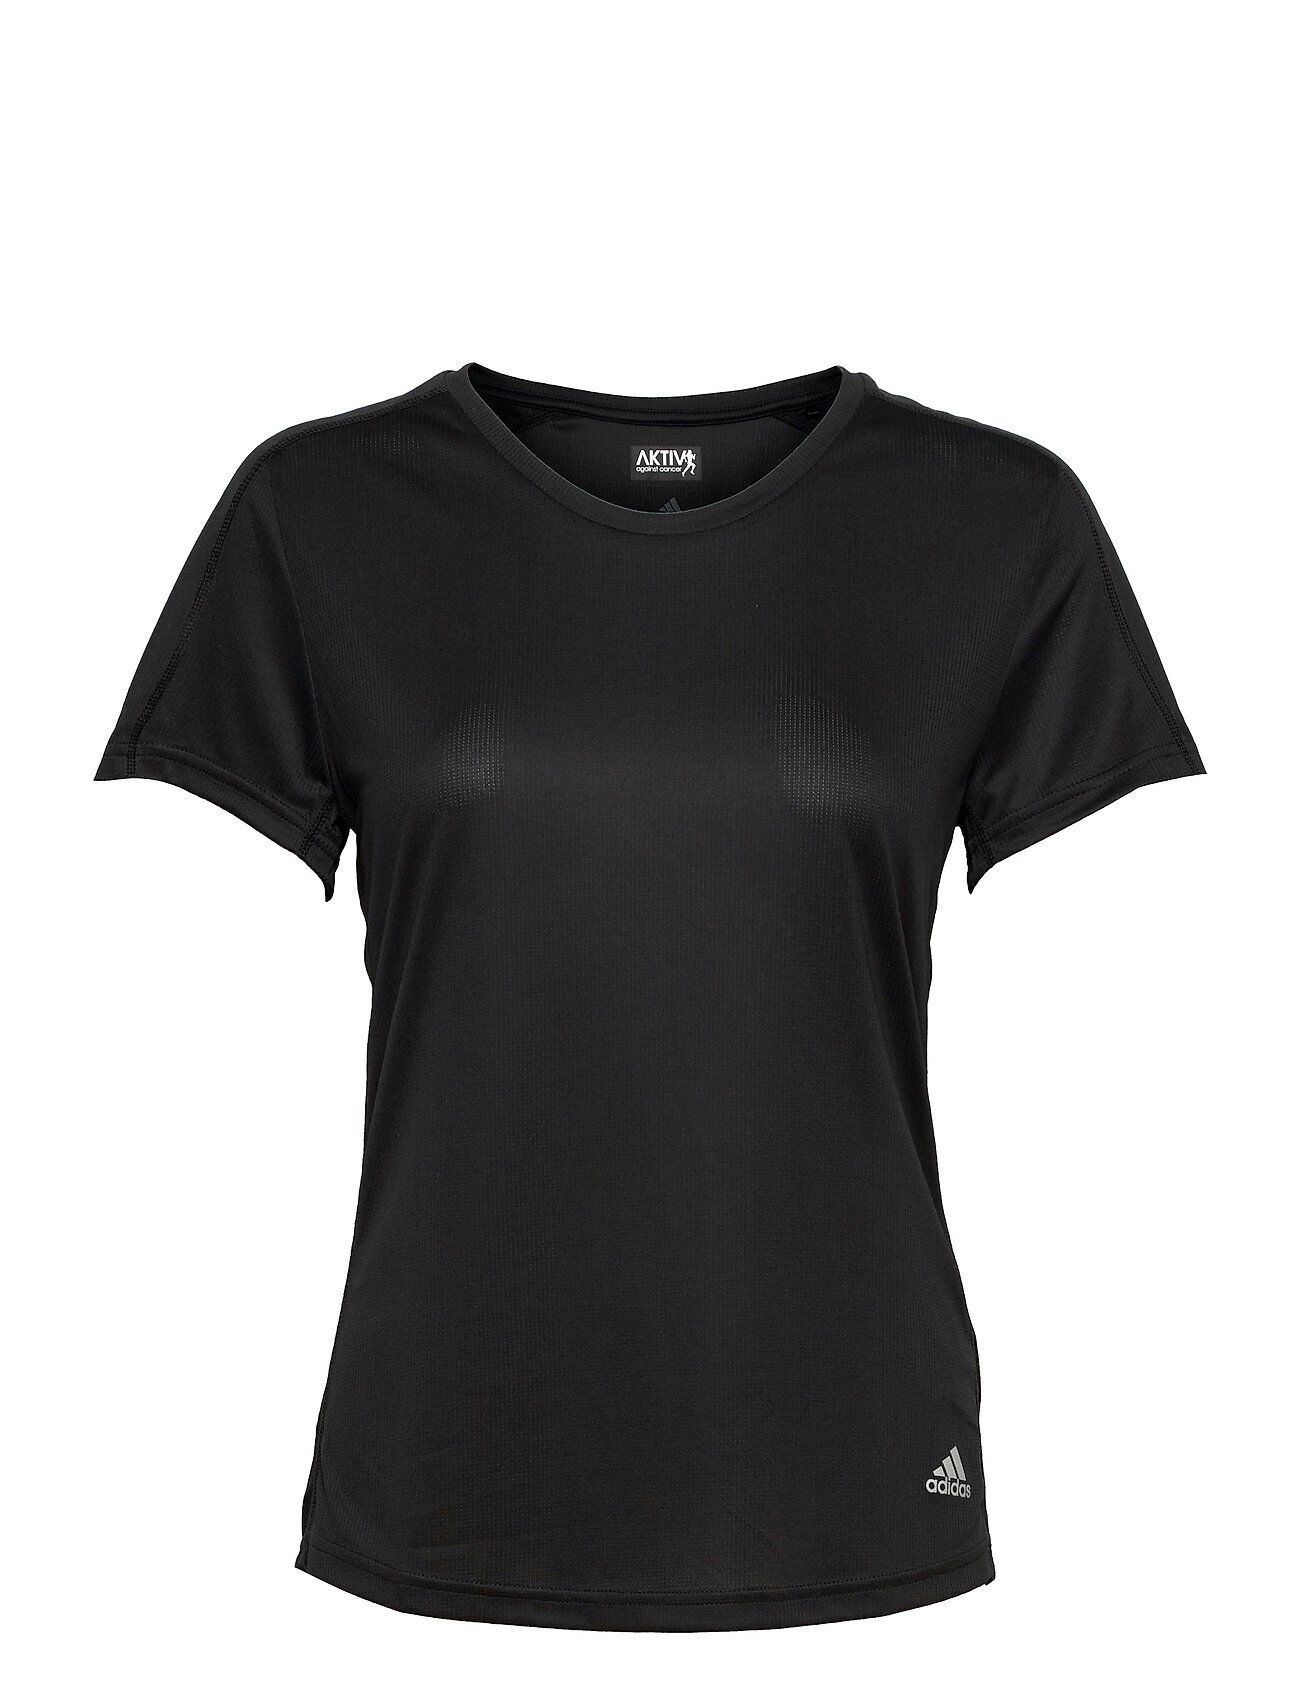 adidas Performance Run It Tee W T-shirts & Tops Short-sleeved Svart Adidas Performance